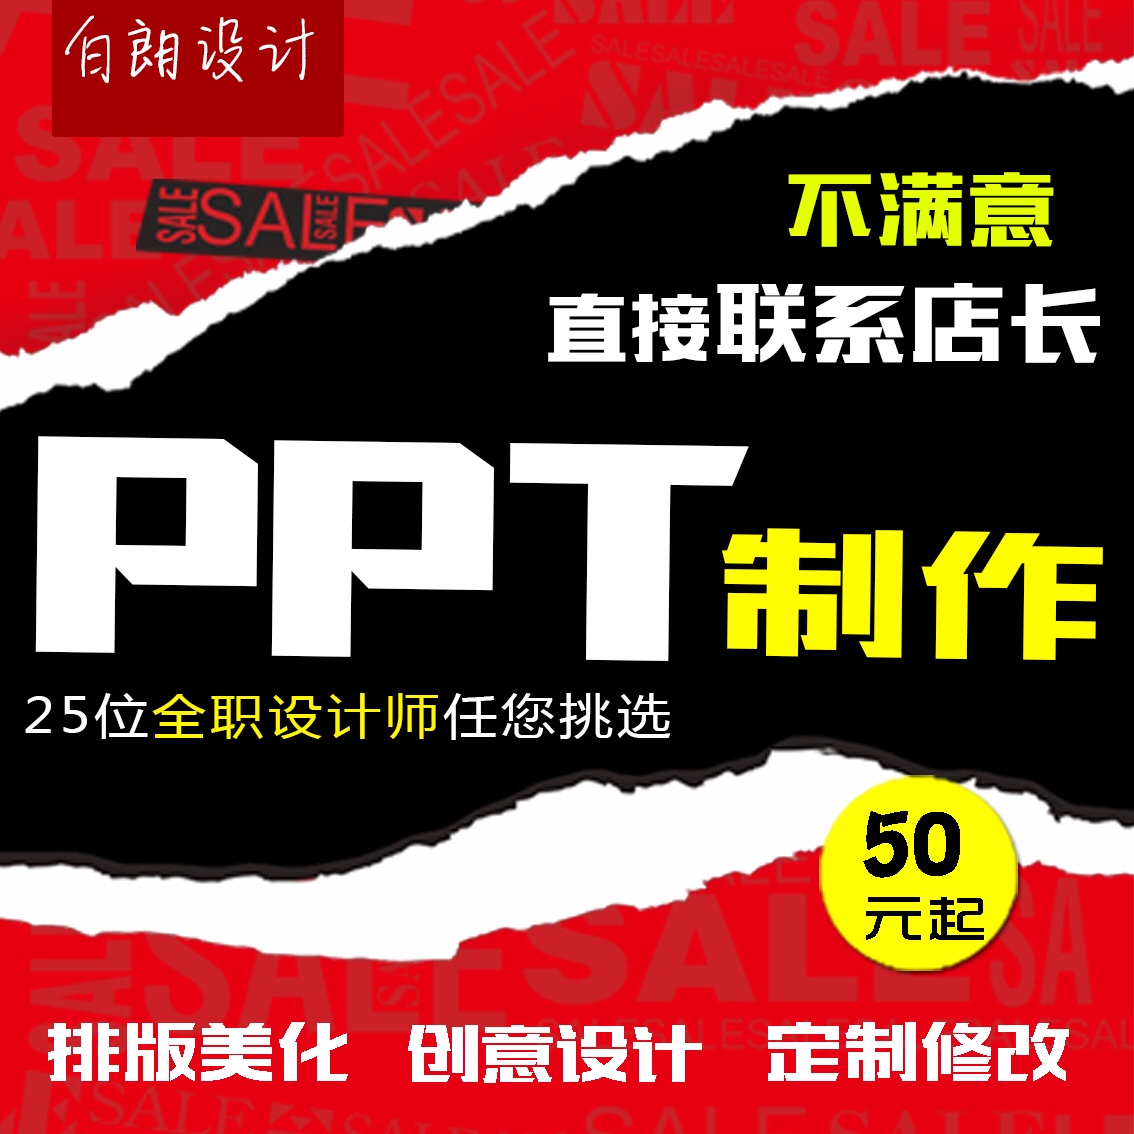 PPT制作PPT设计ppt美化代做幻灯片动态英语设计pdf修